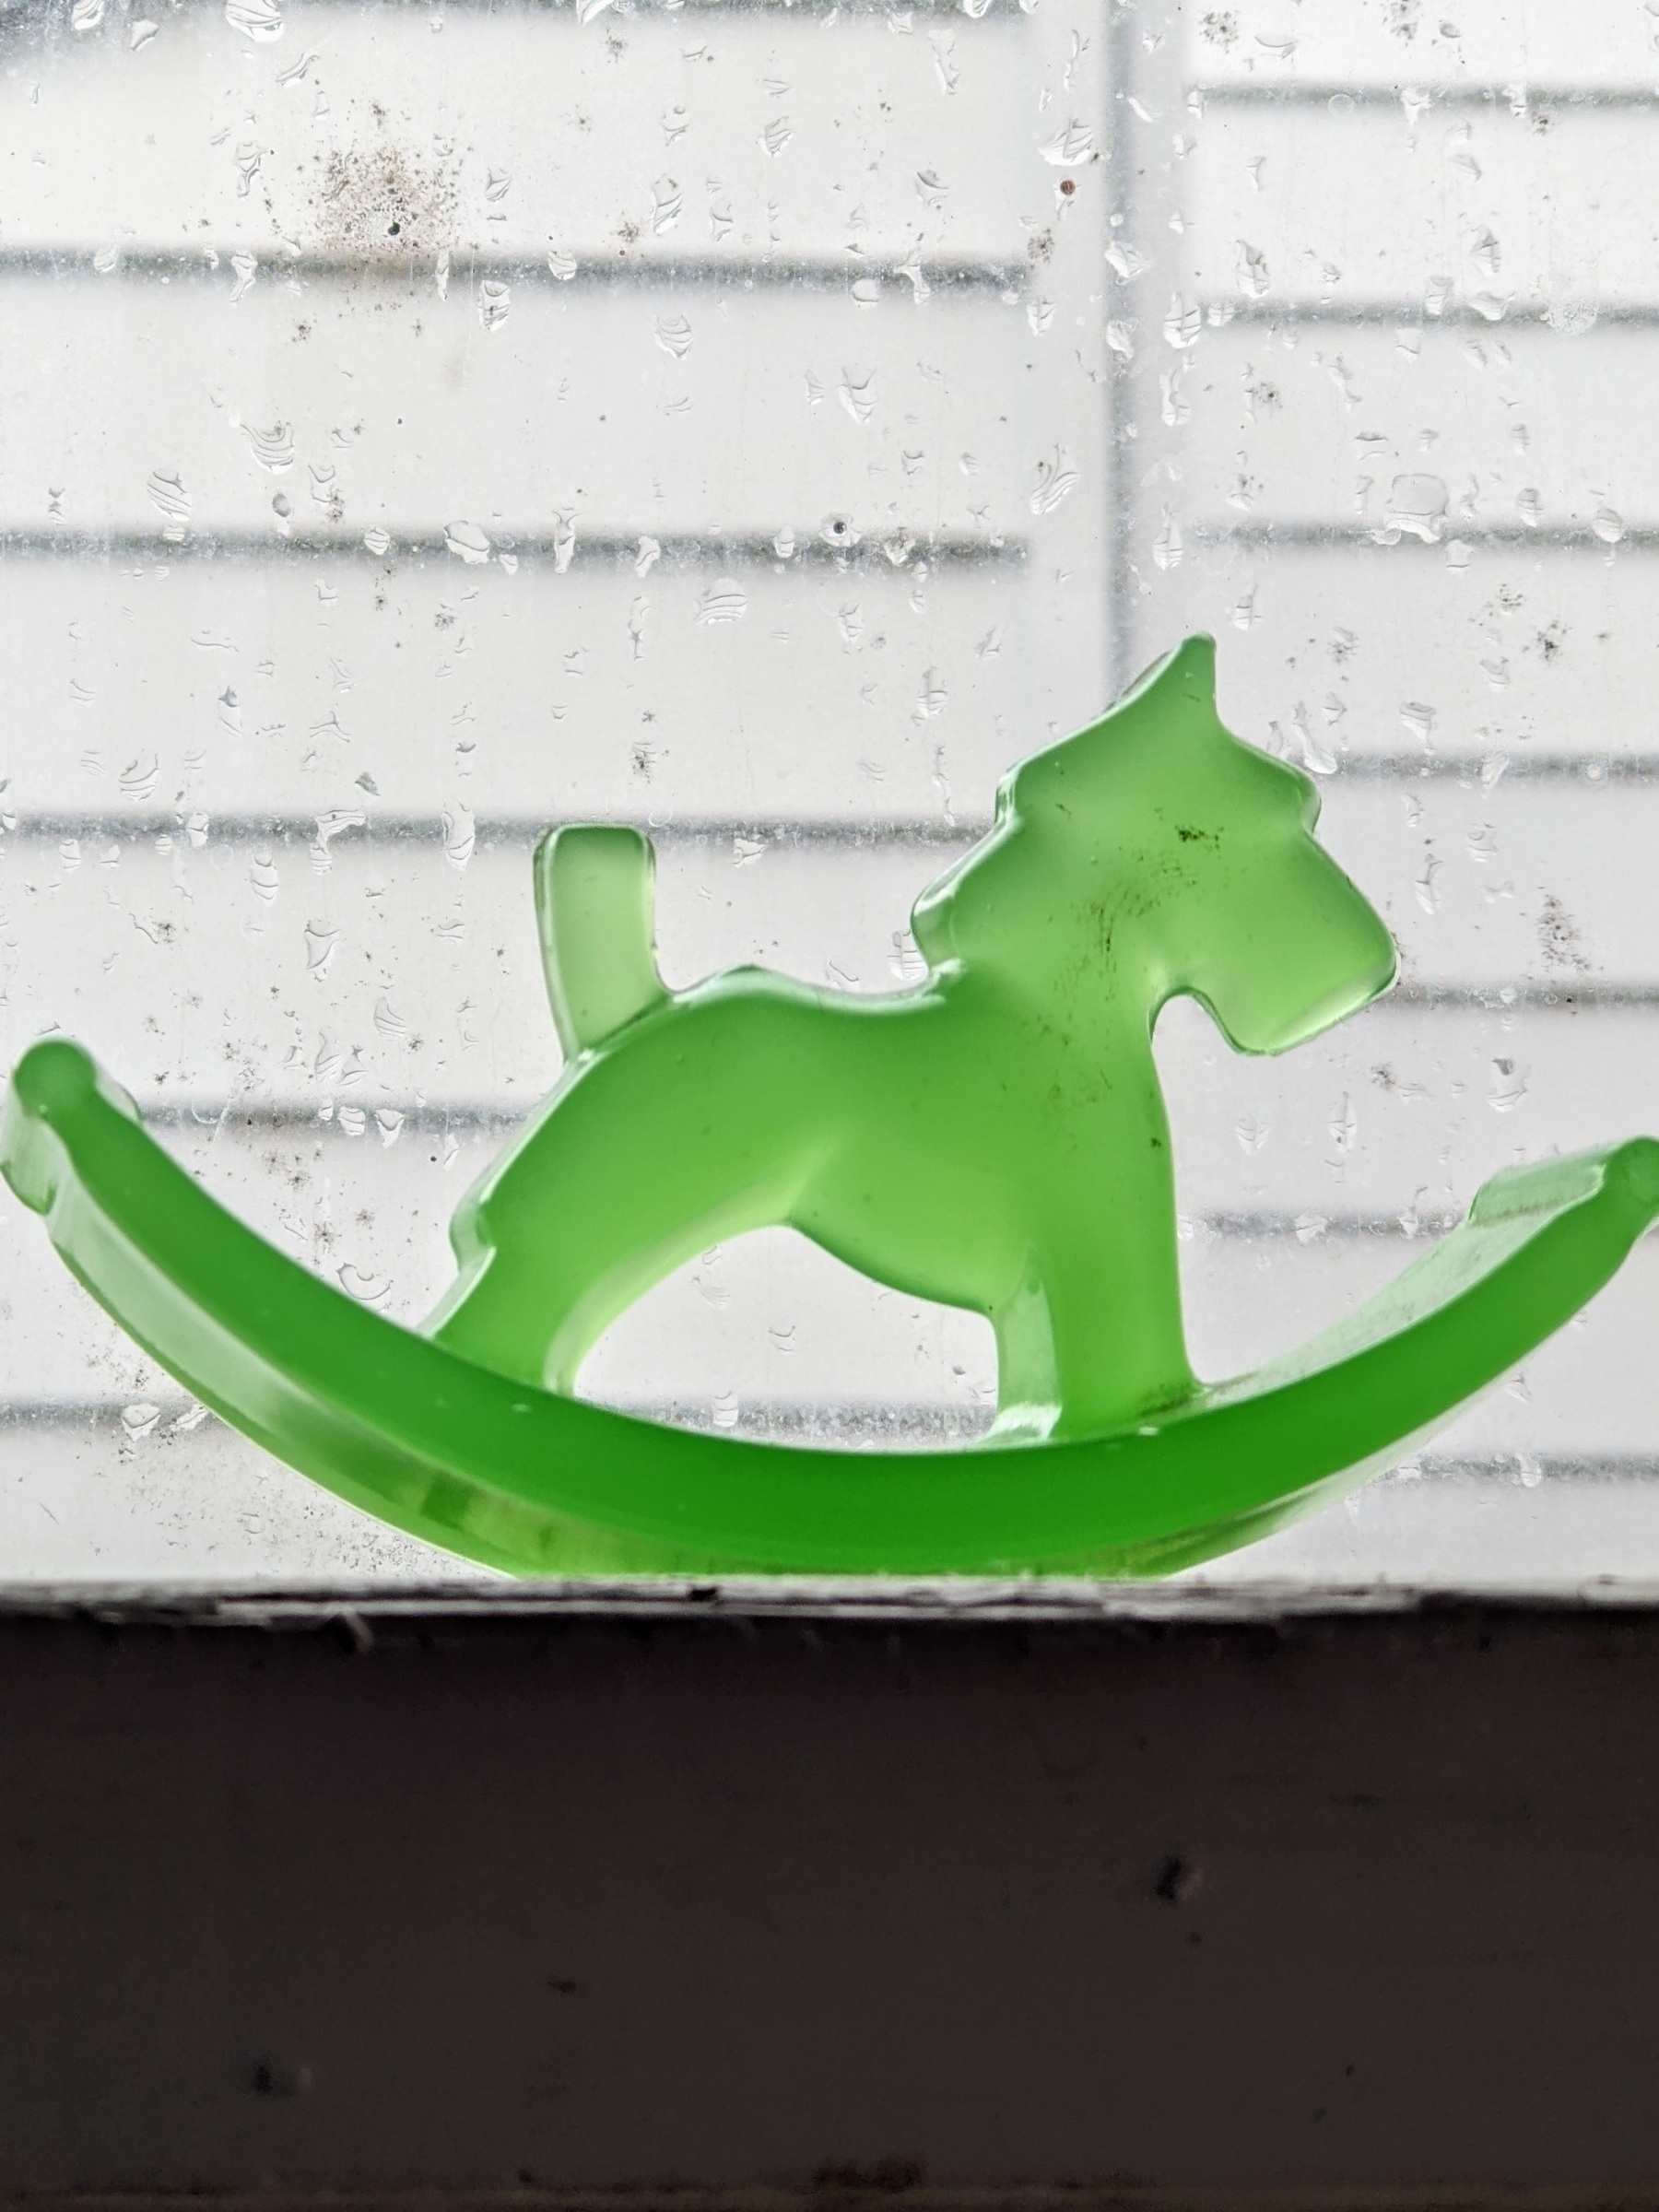 green glass rocker blotter with a figure of a Scottie dog as the rocker handle